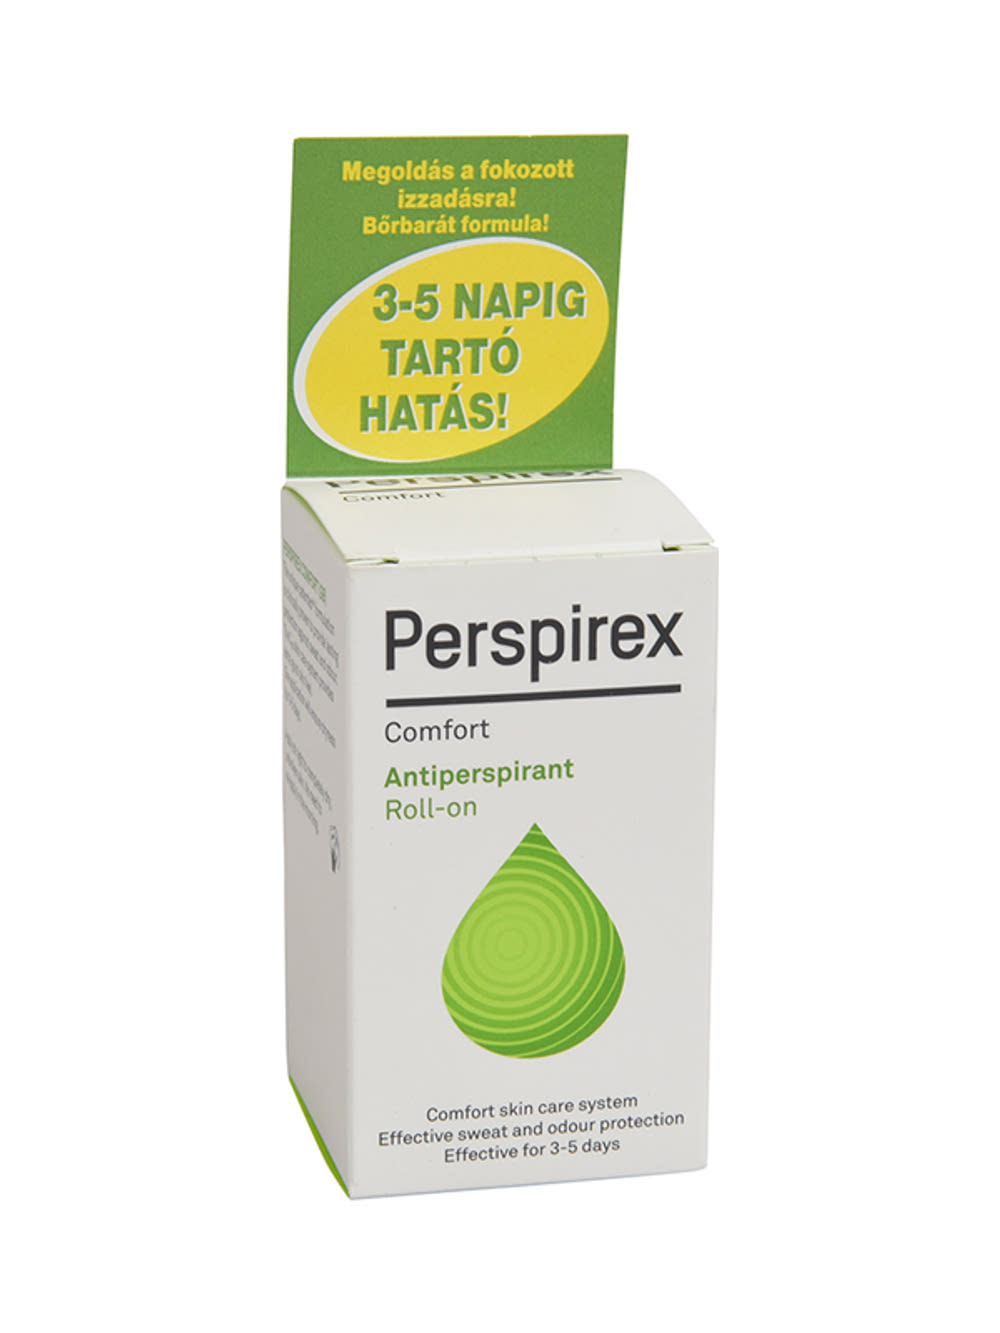 Perspirex Comfort Roll-on 20 ml., Derma Shop